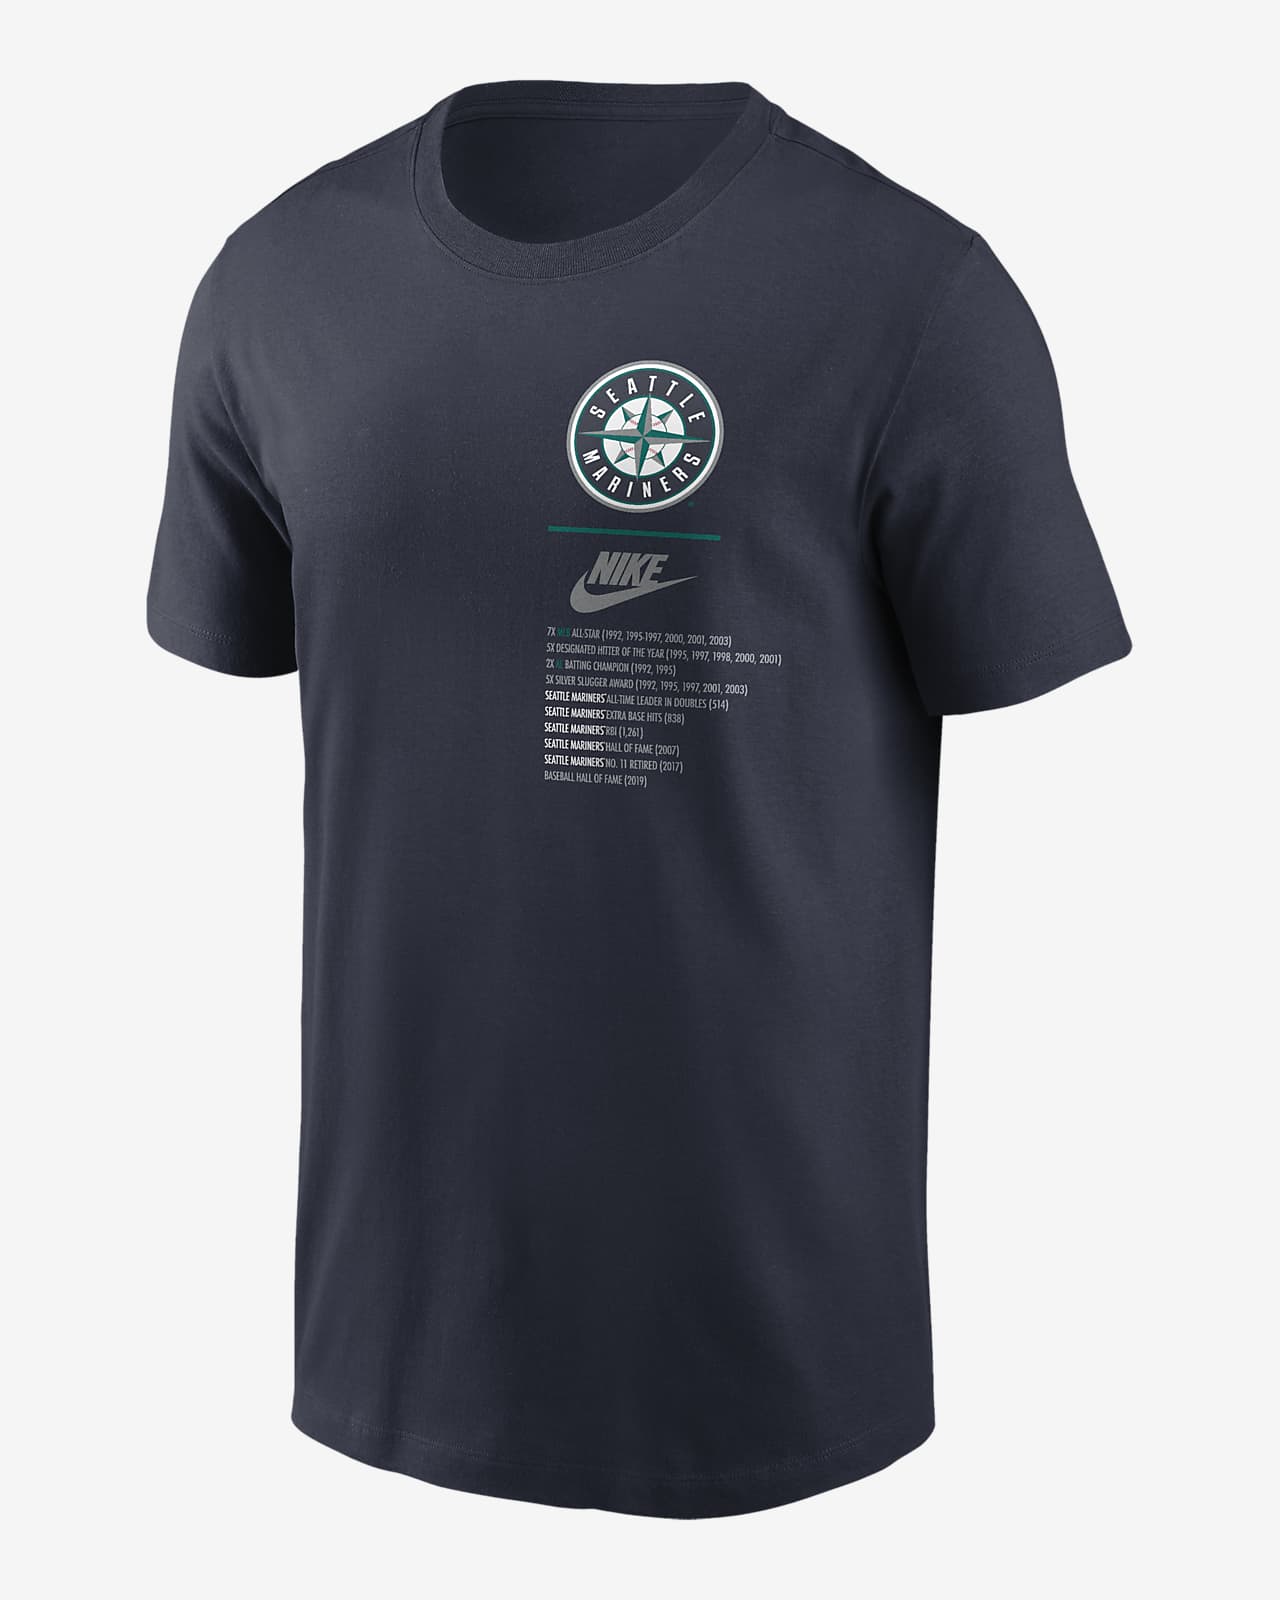 Edgar Martinez Seattle Mariners Legends Men's Nike MLB T-Shirt.